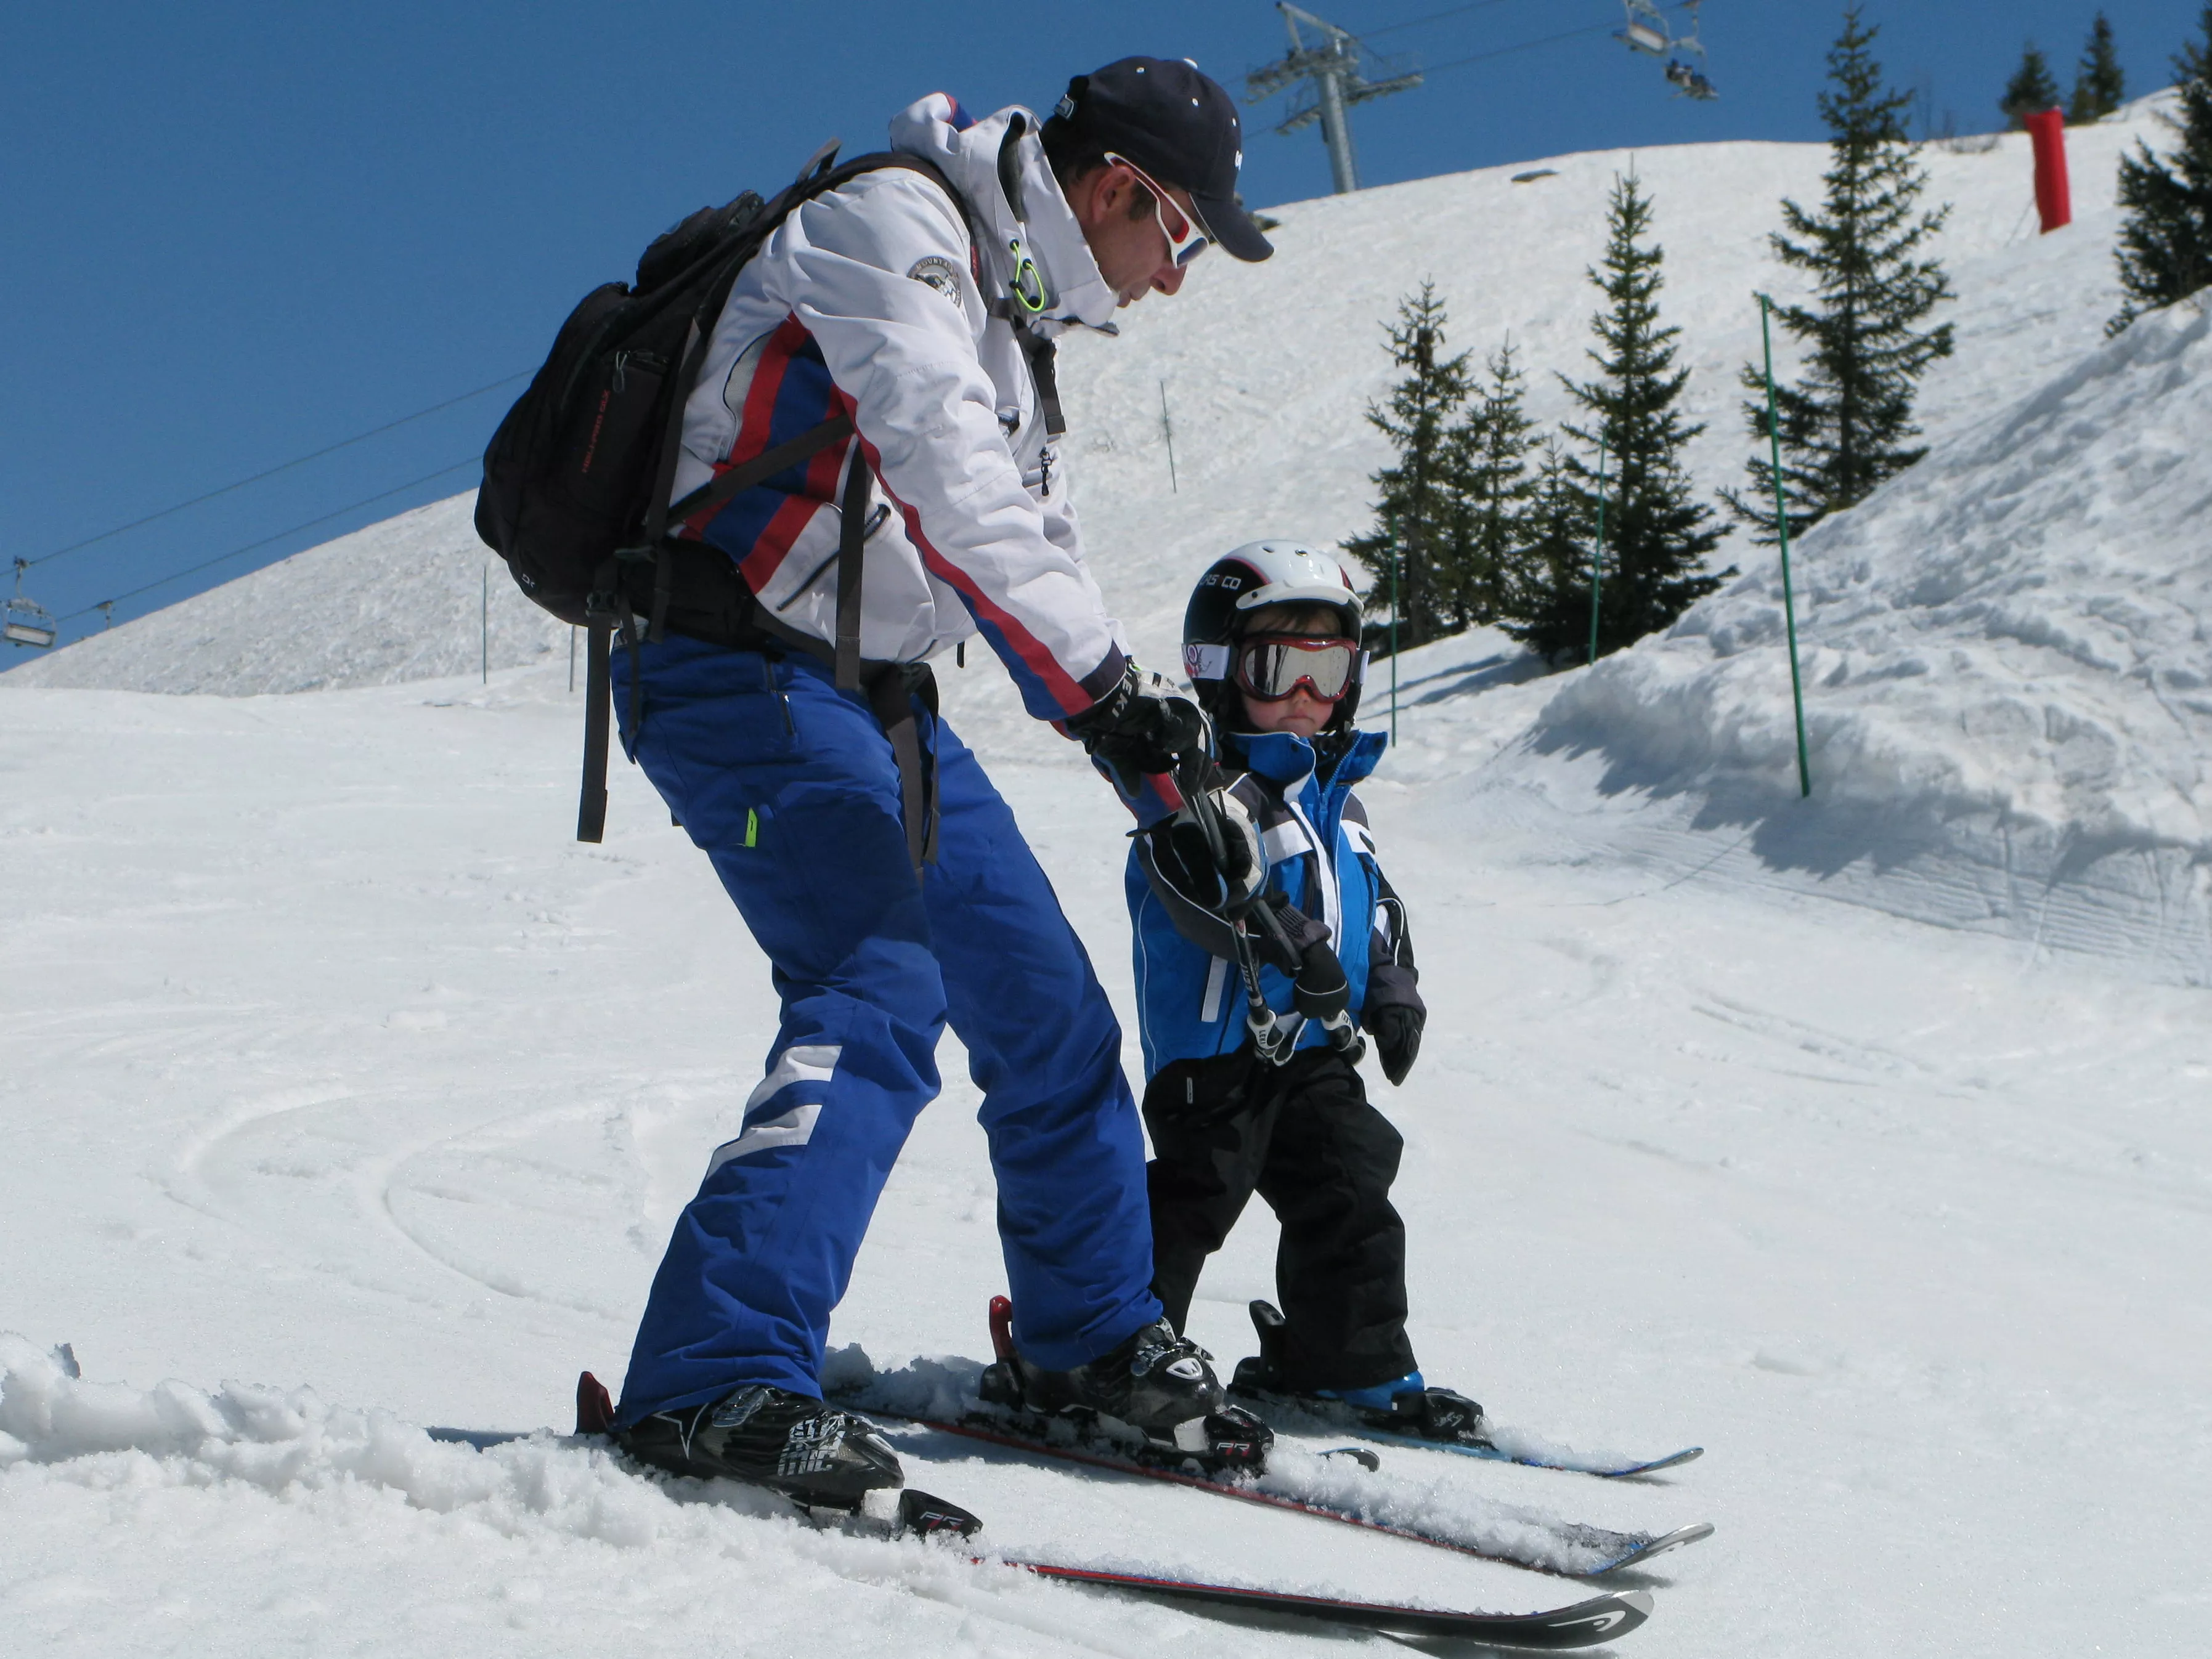 Skifamily Escuela de Esqui in Spain, Europe | Snowboarding,Skiing - Rated 0.9